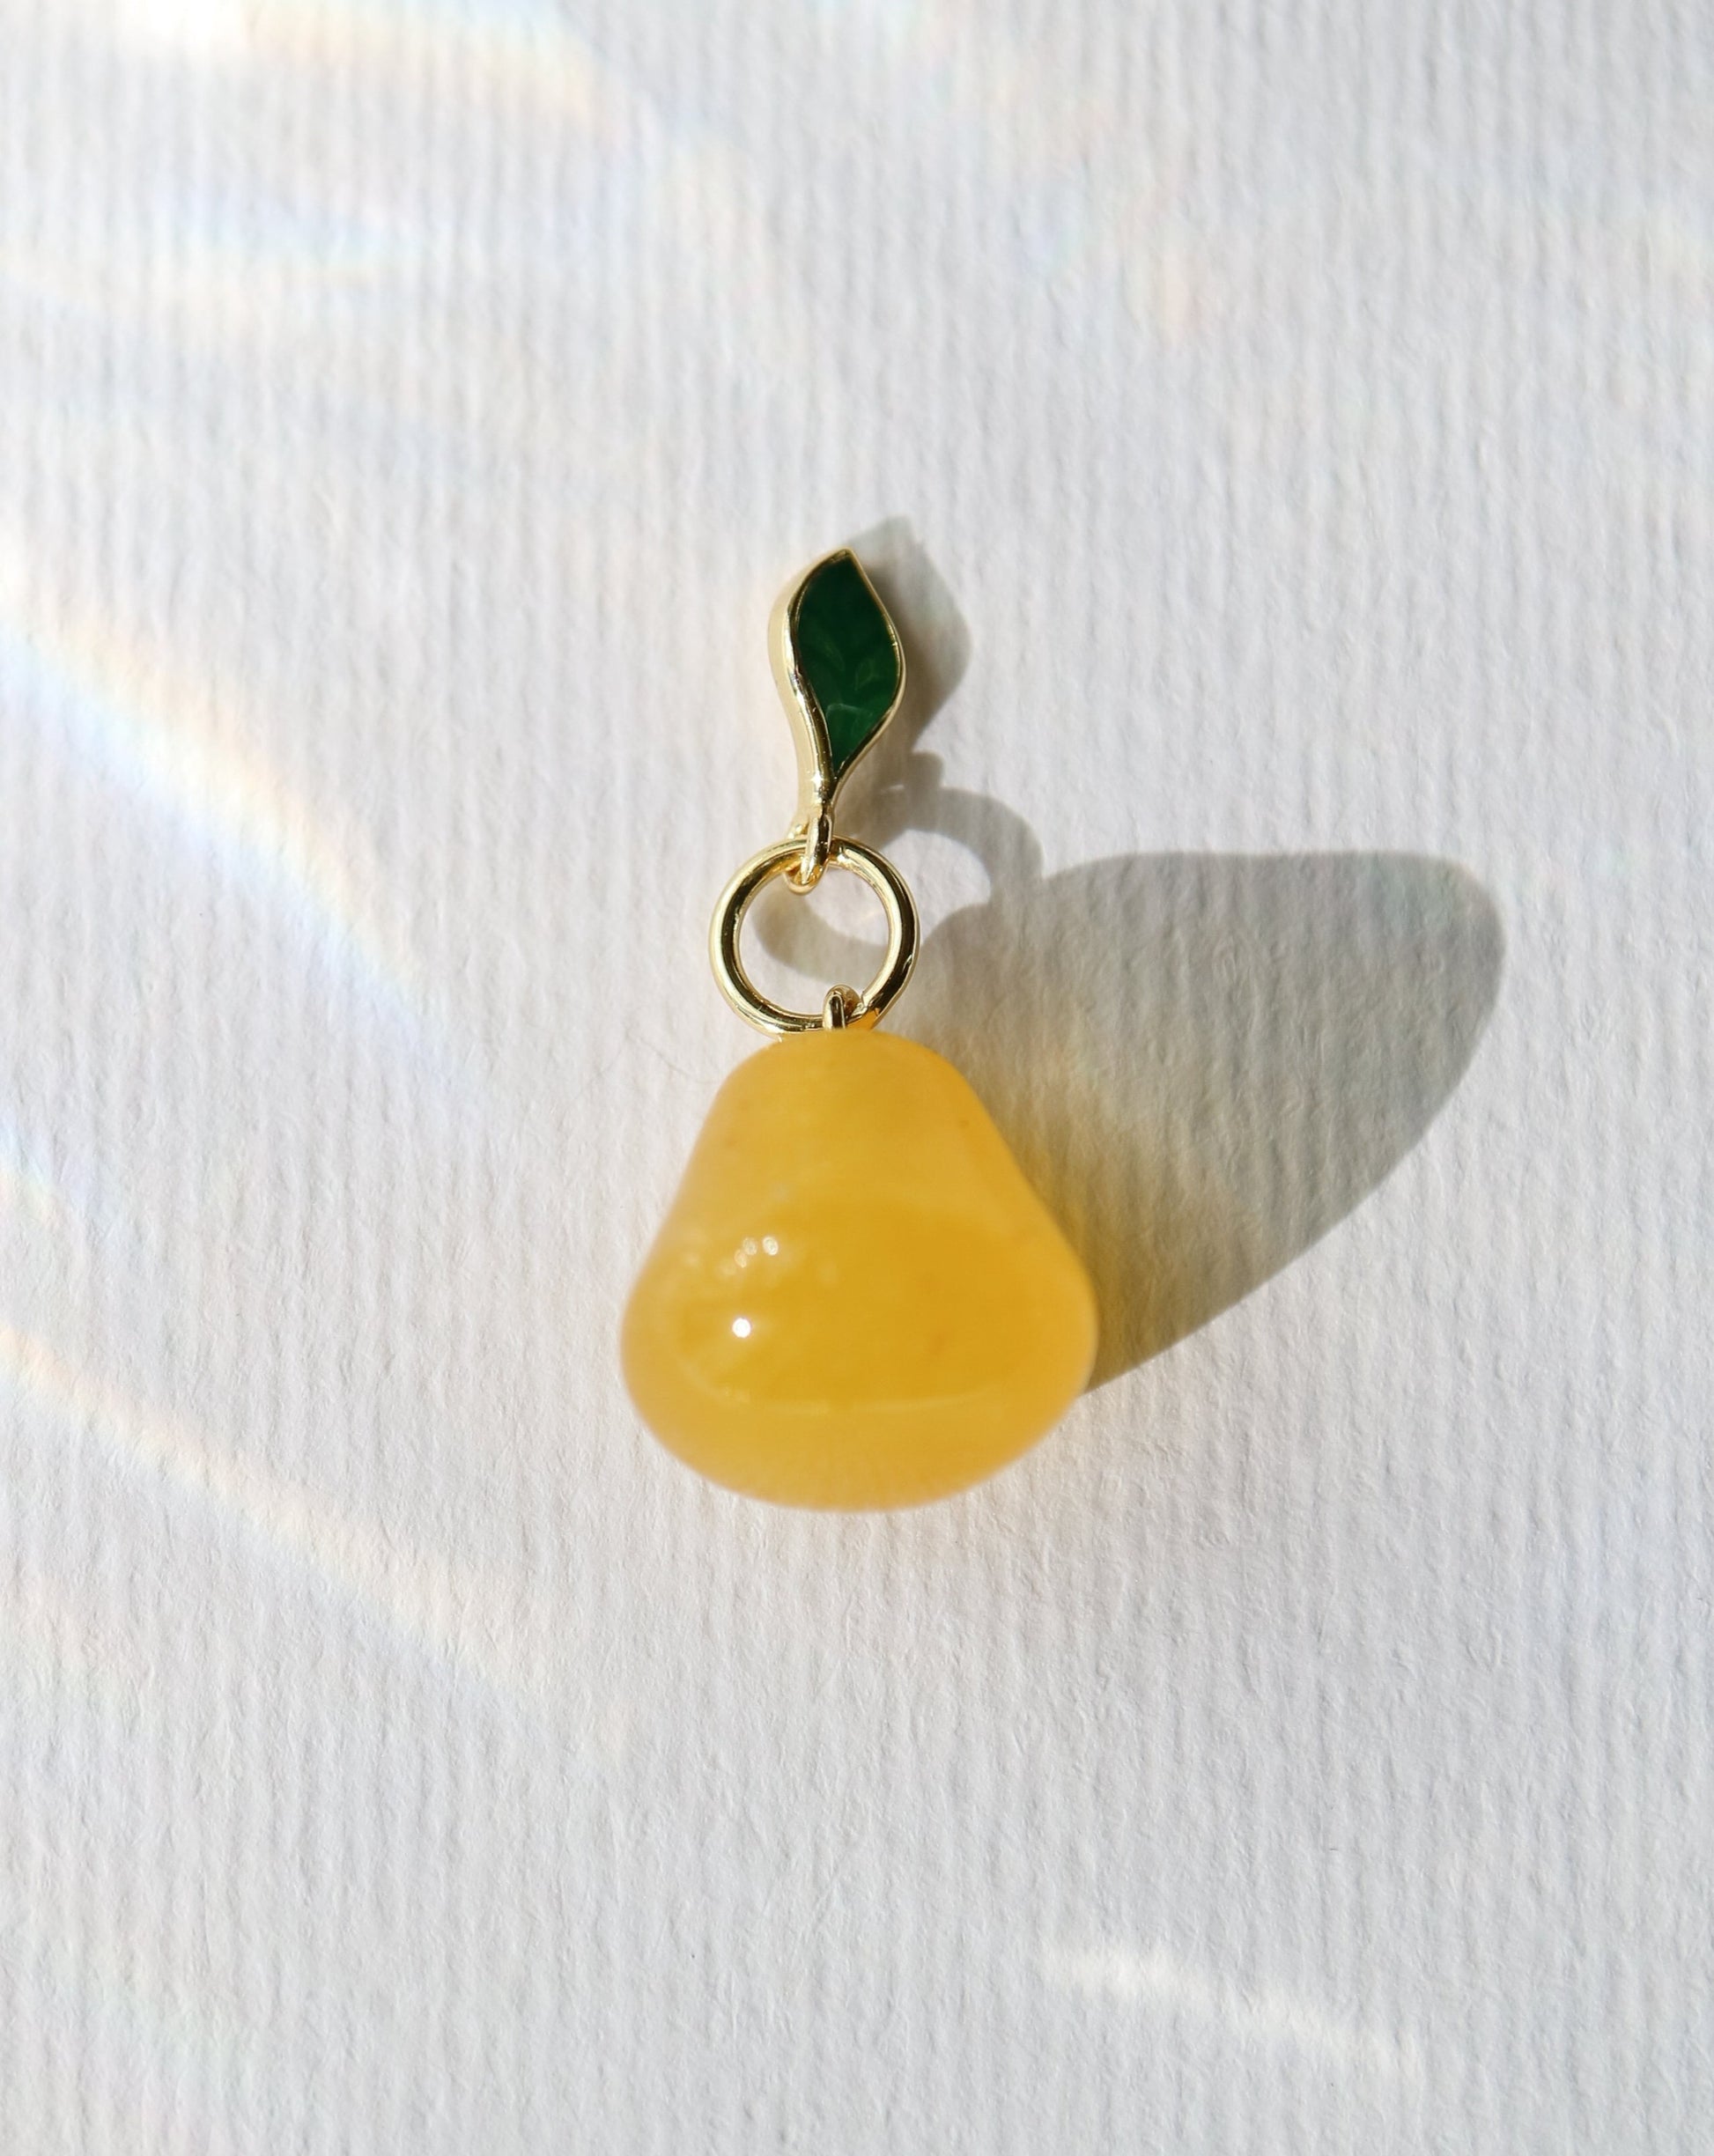 Lemon charm for jewellery